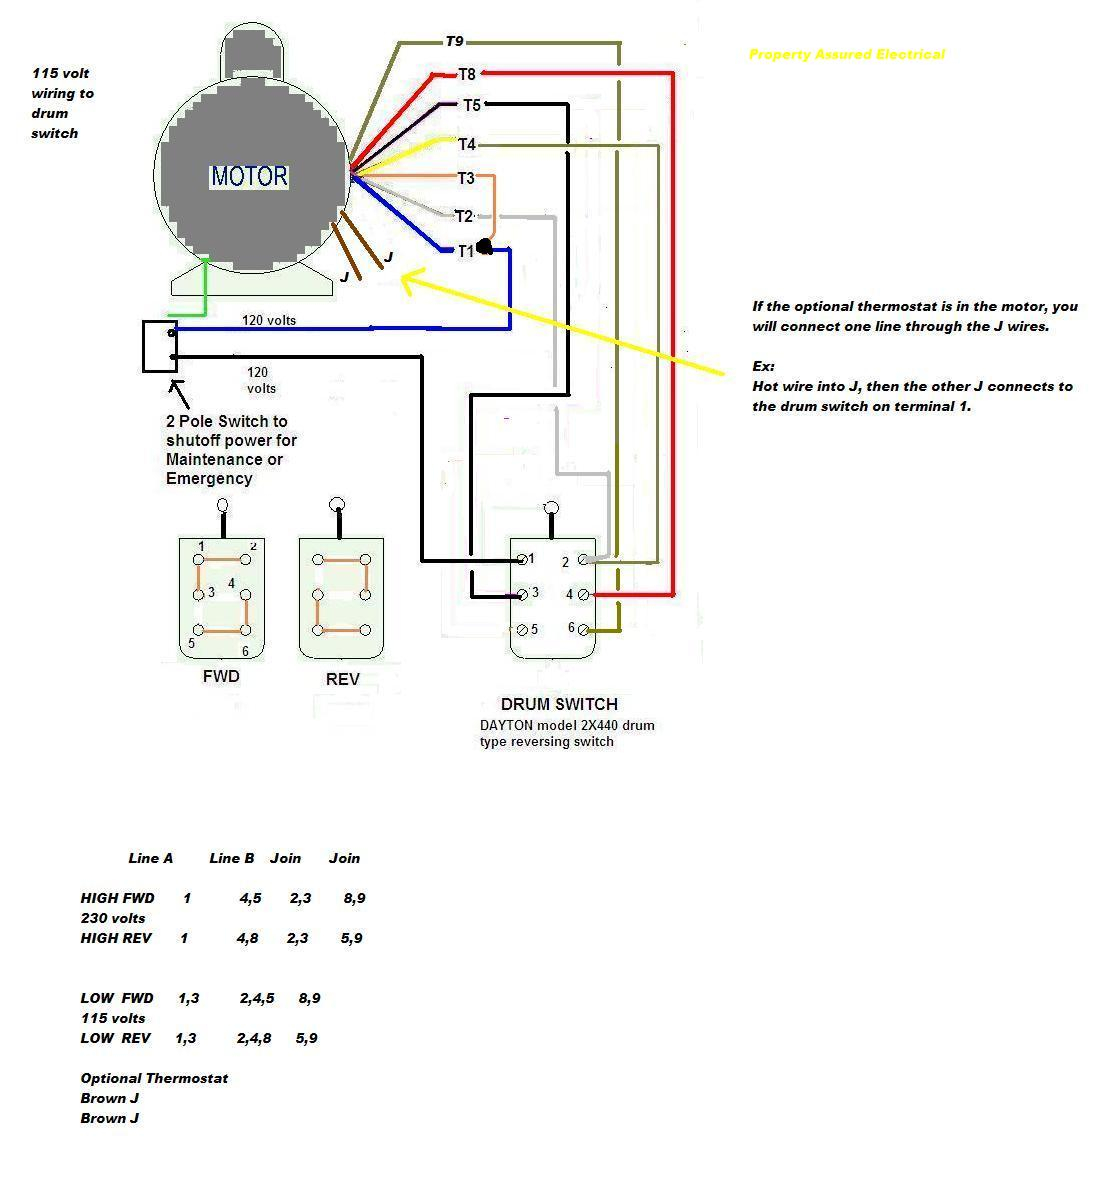 electric motor wiring diagram 220 to 110 Download-Wiring Diagram Baldor Motor Diagrams 3 Phase 9 Wire Best 208V 8 10-b